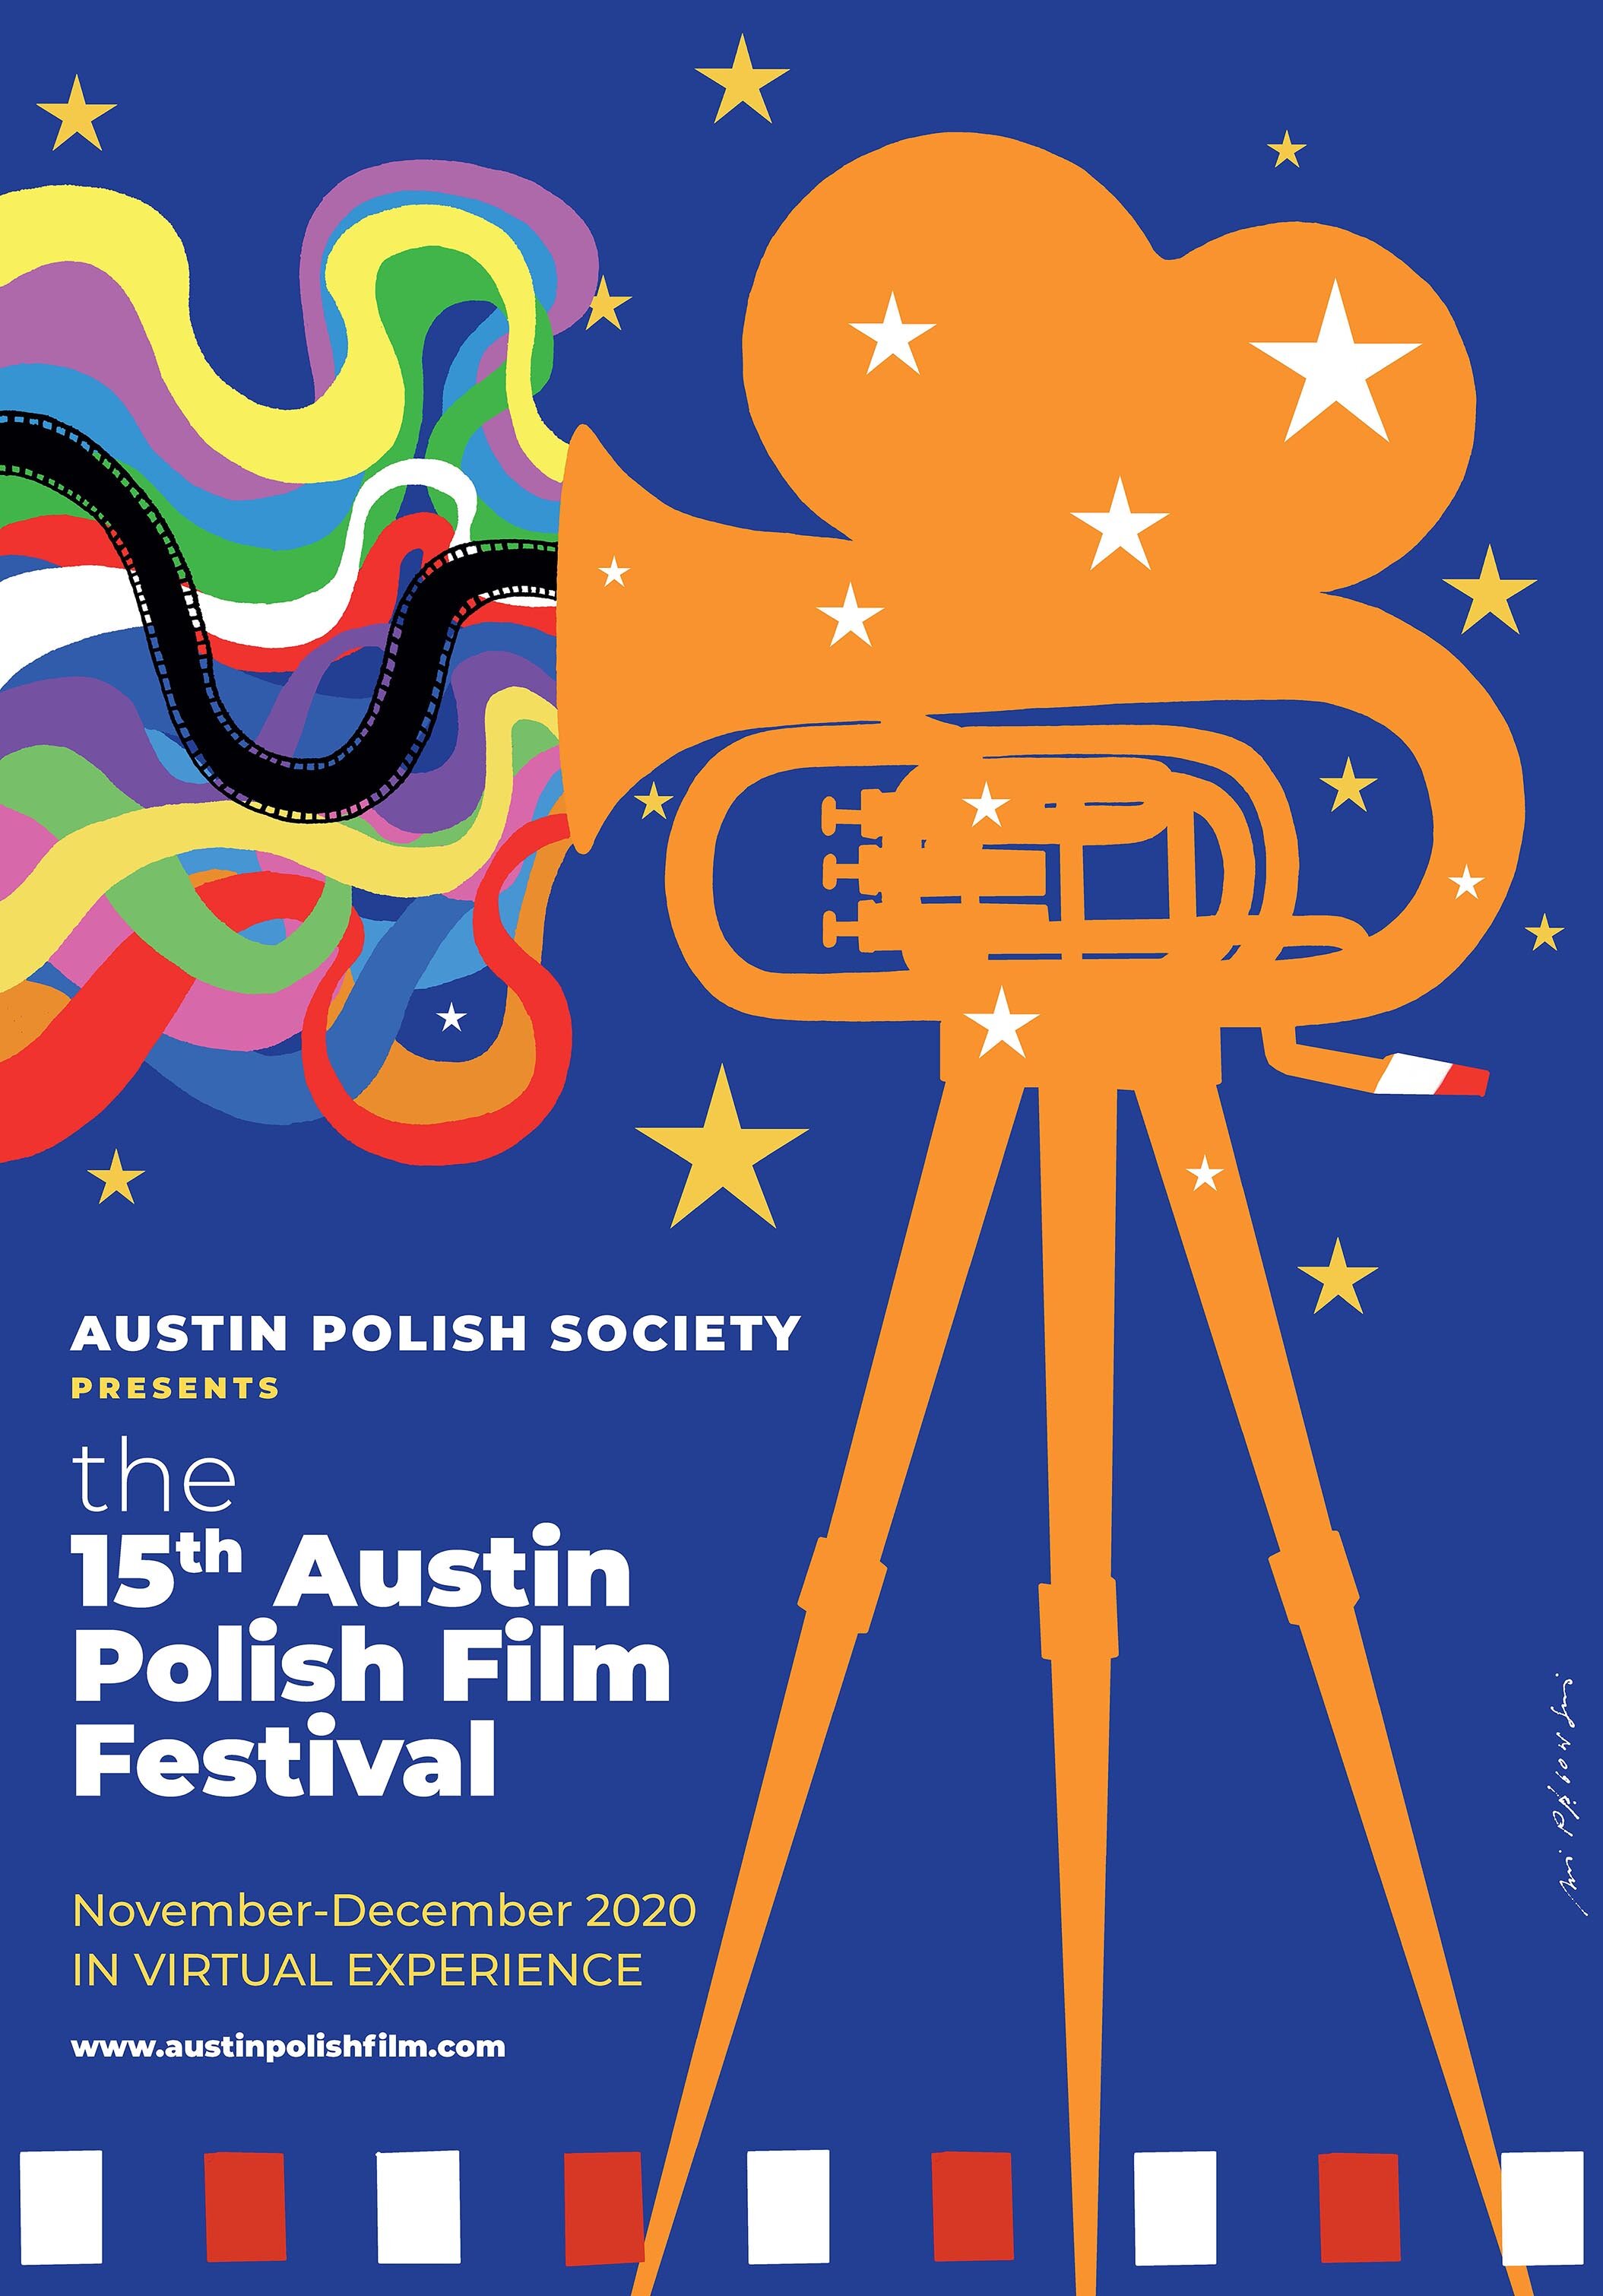 Austin Polish Film Festival